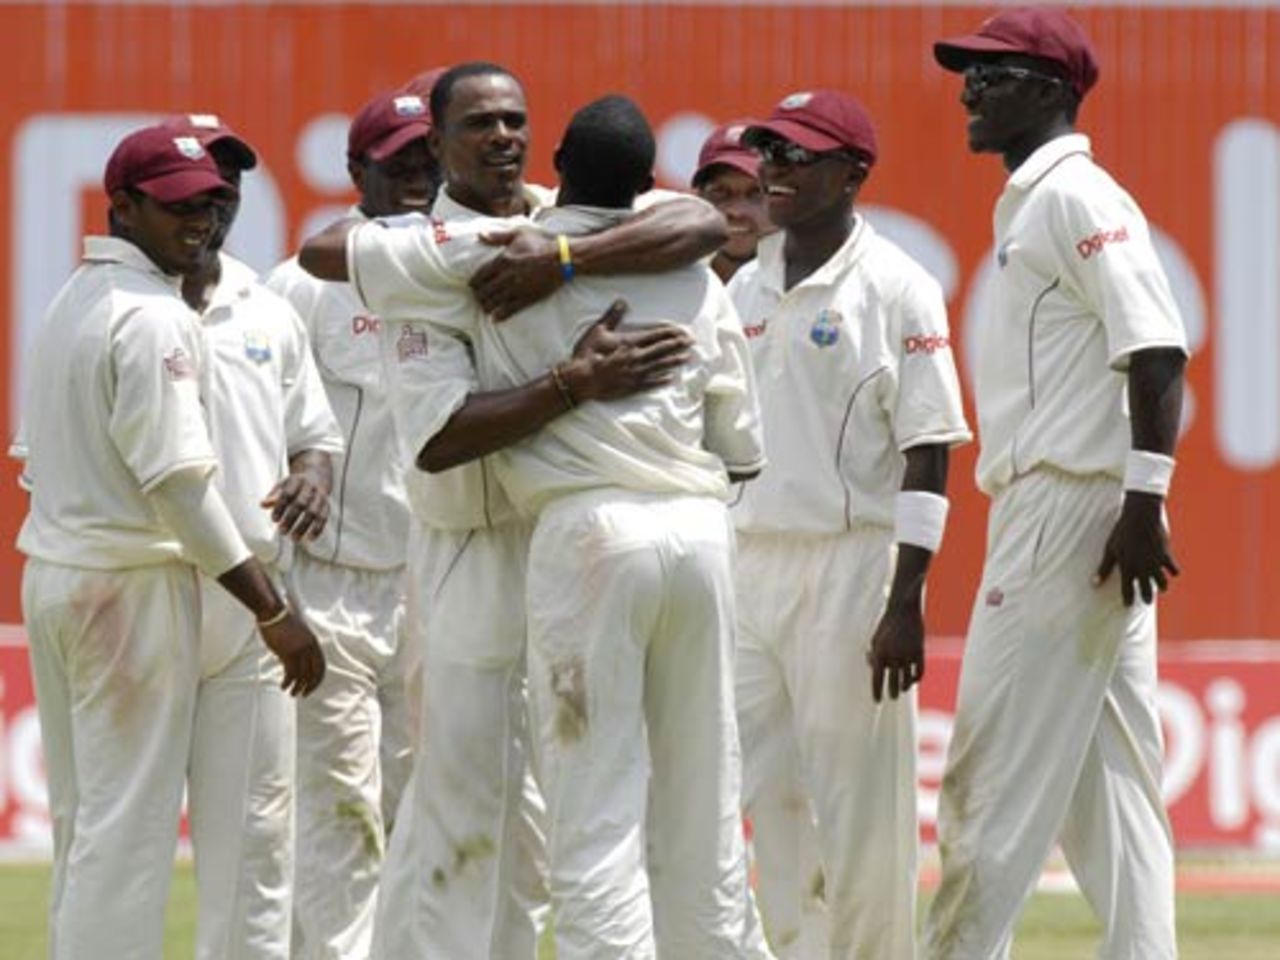 Runako Morton is congratulated on a brilliant catch to remove Brad Haddin, West Indies v Australia, 1st Test, Jamaica, May 25, 2008